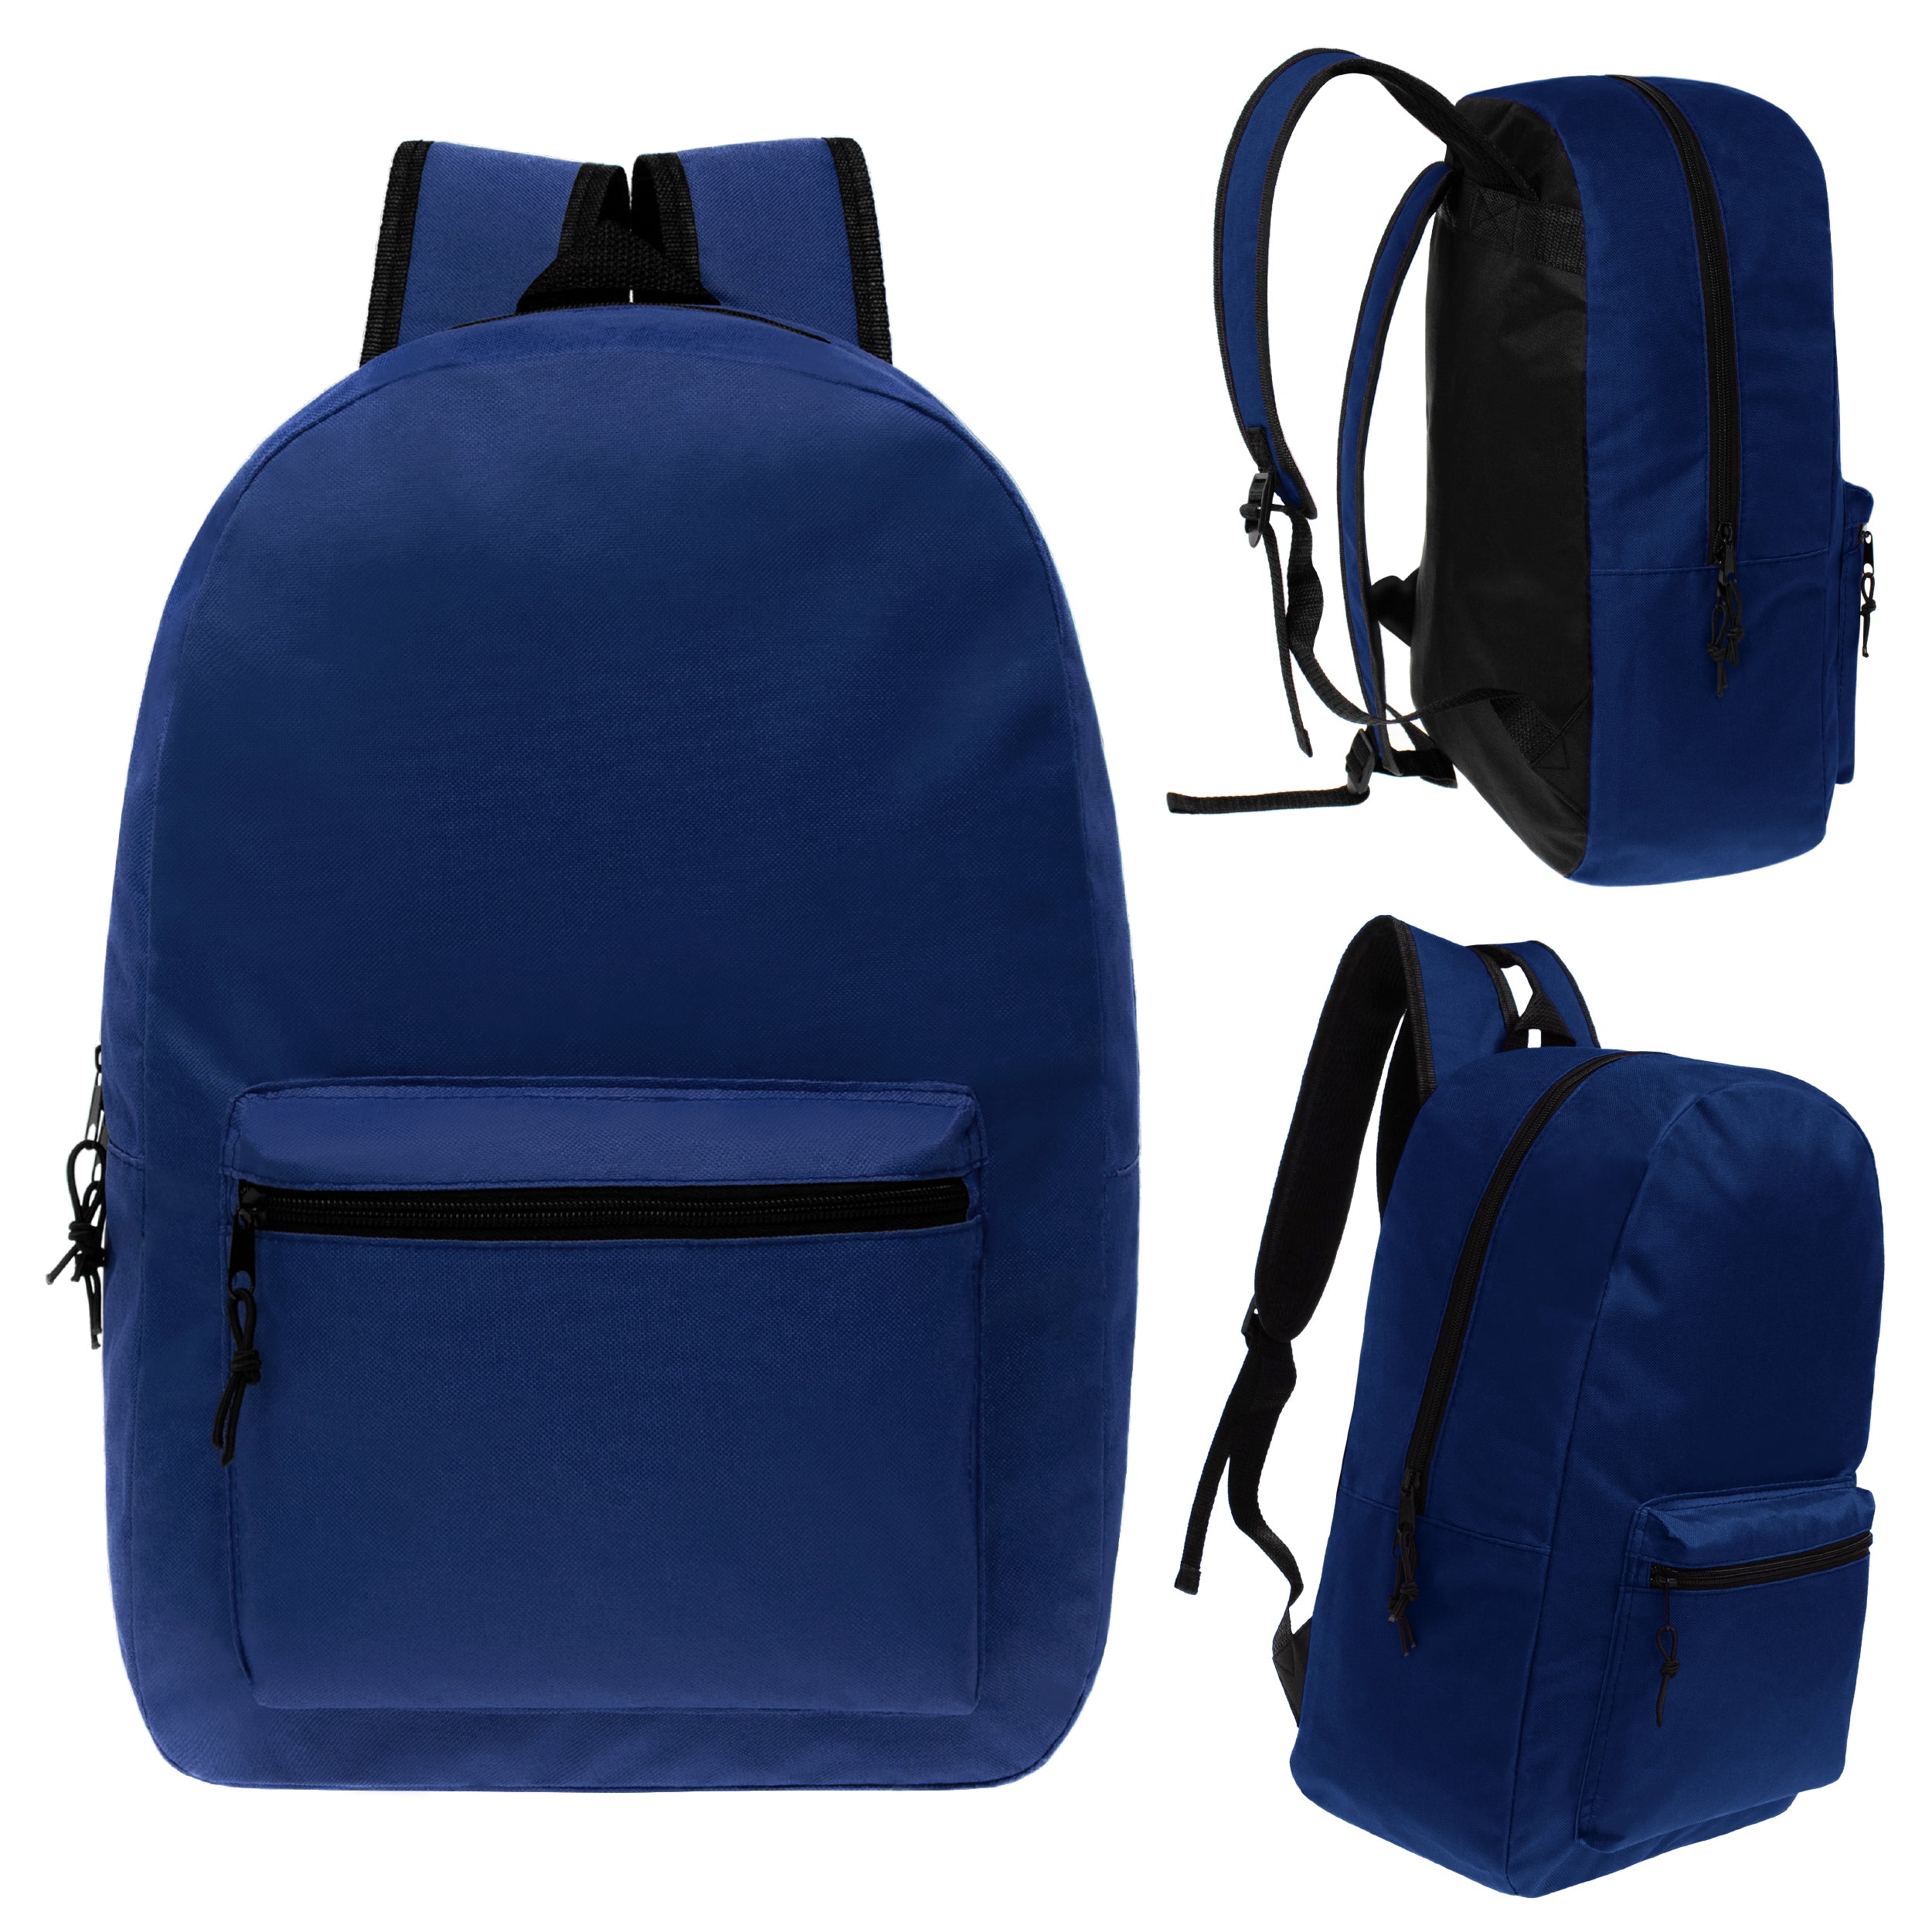 Wholesale Backpacks and School Supplies | Backpacks USA